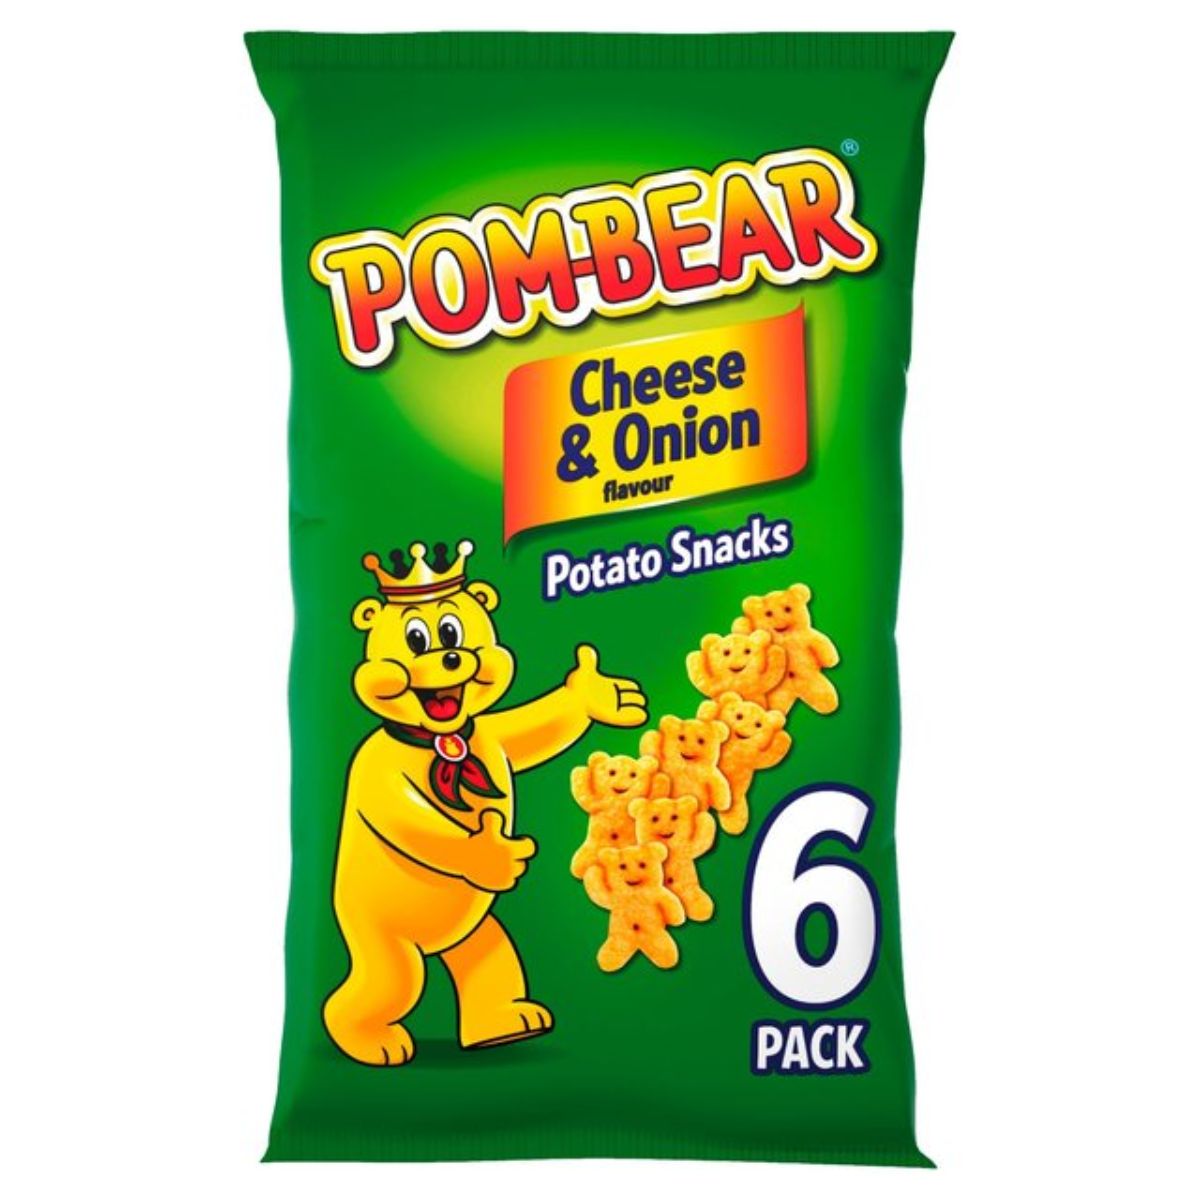 PomBear - Potato Sacks Cheese & Onion - 6x13g.